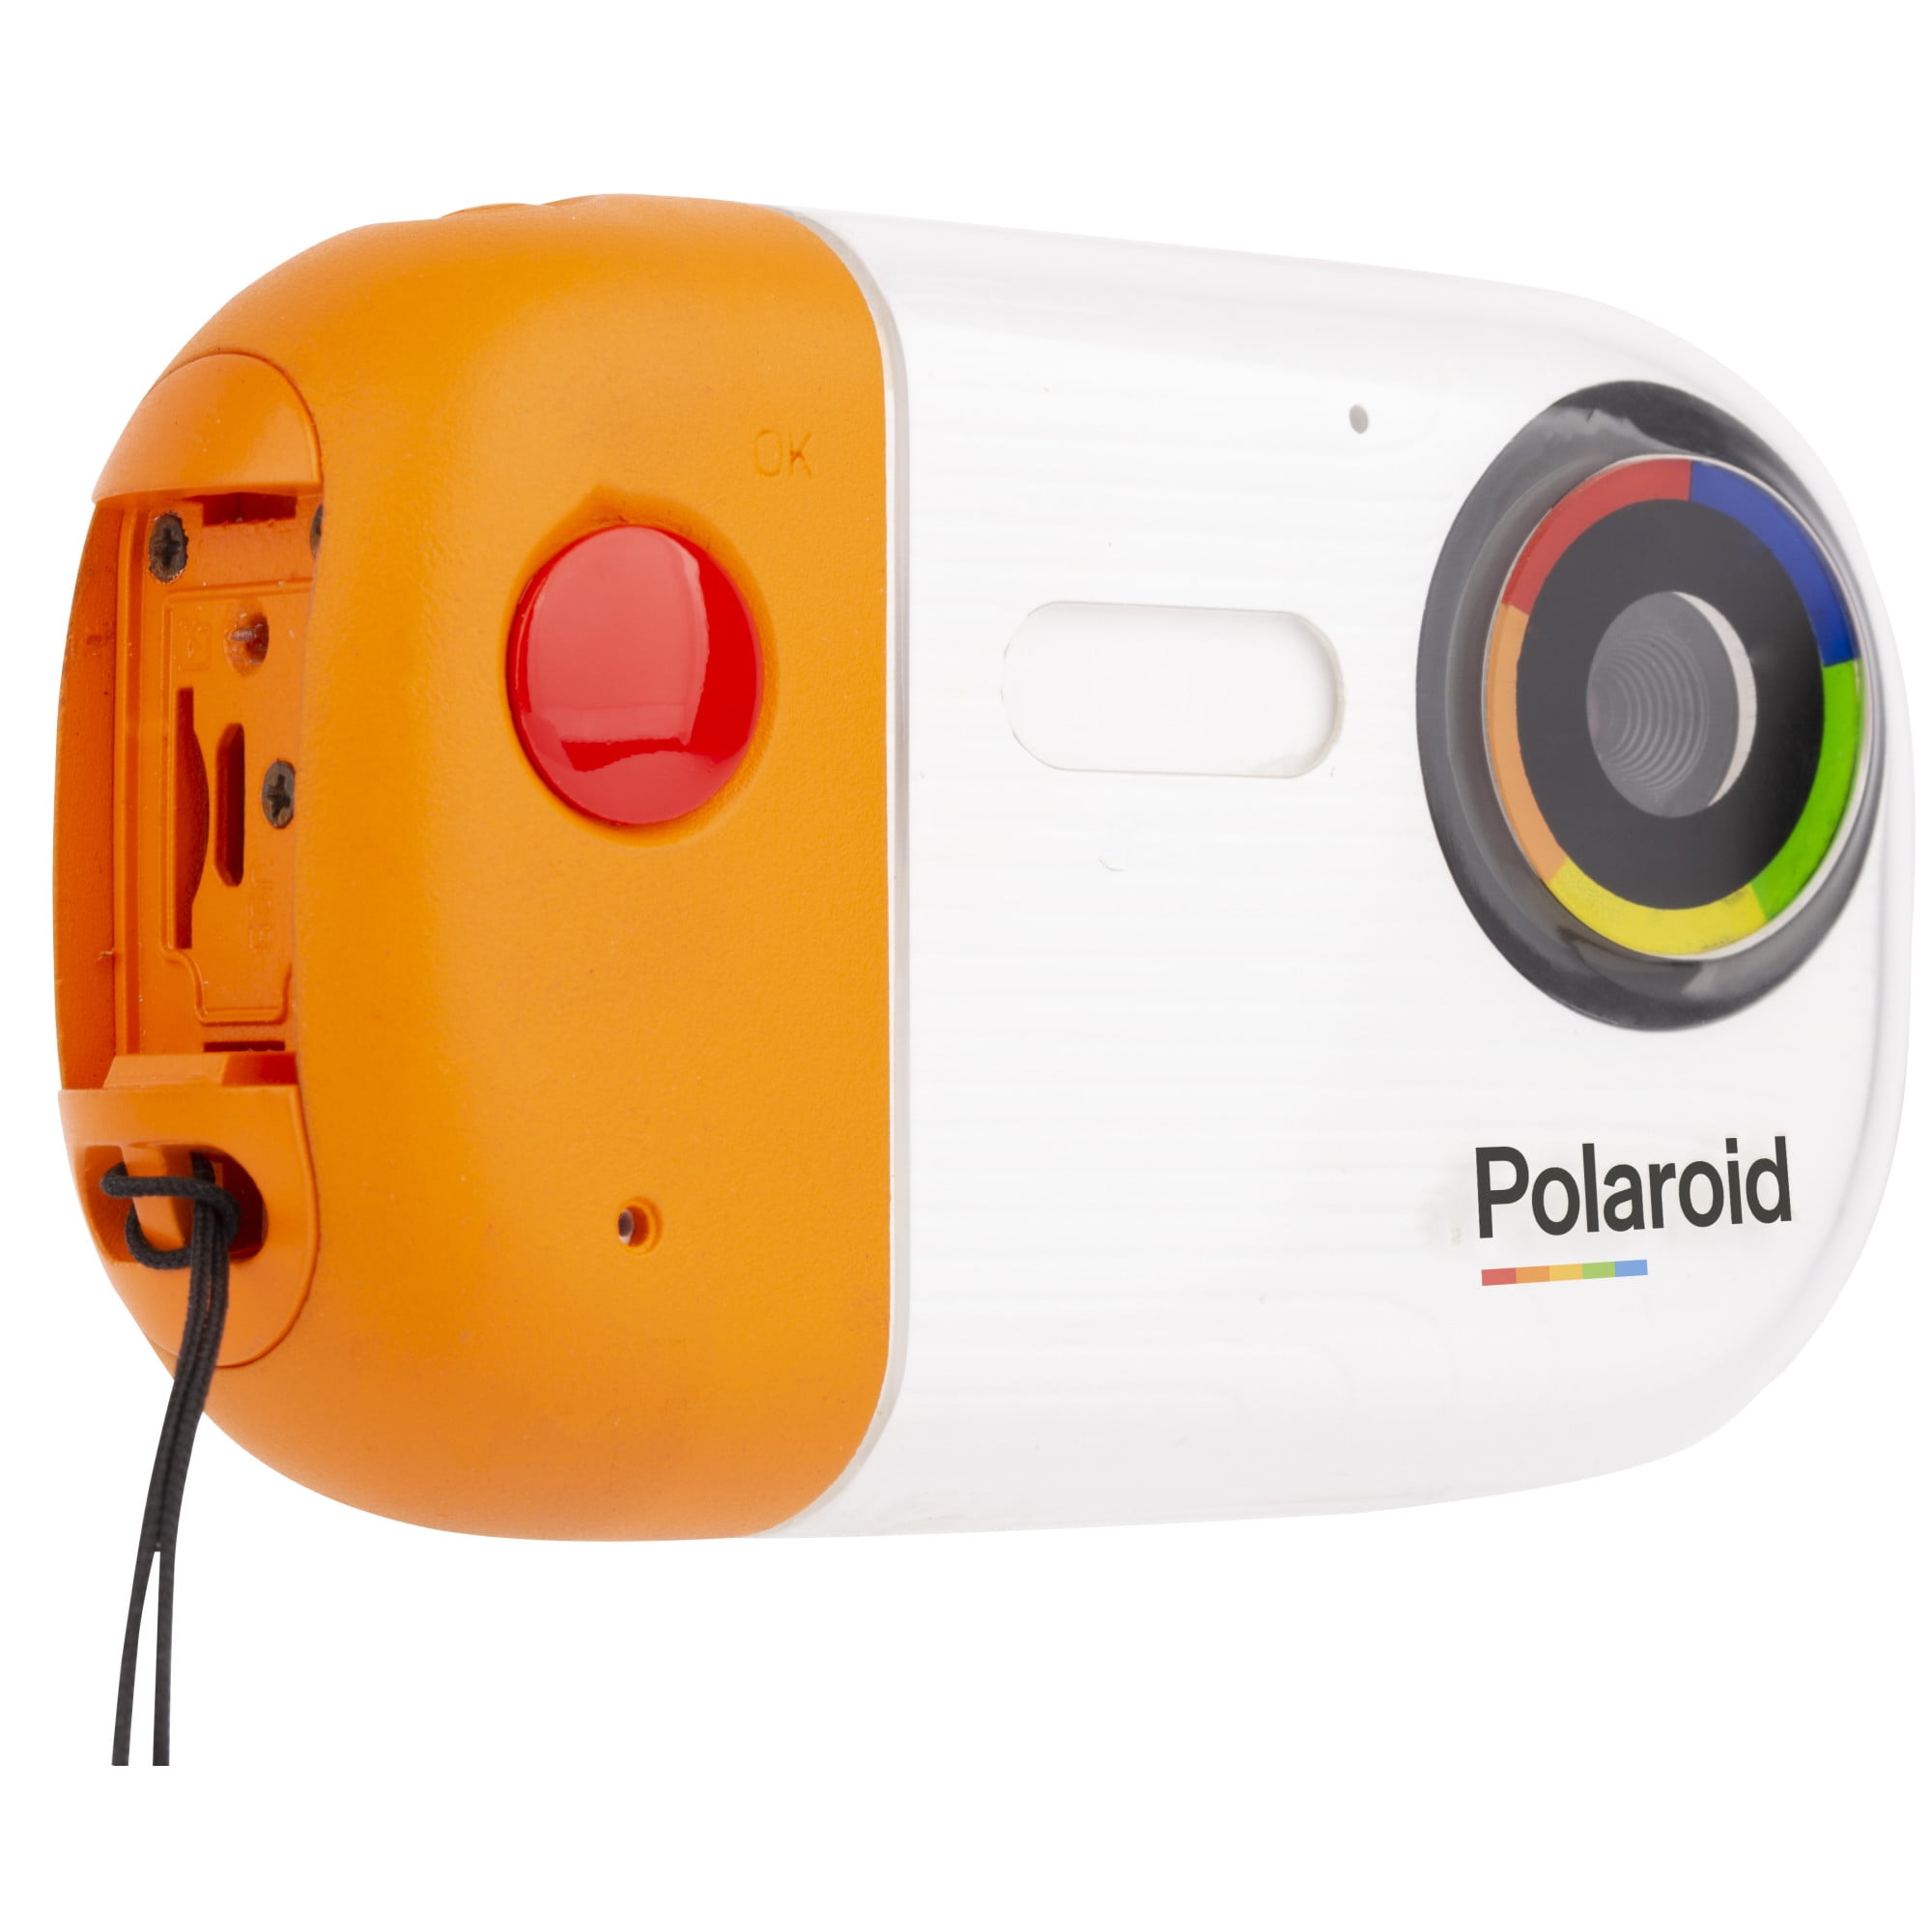 Polaroid - Cámara submarina de 18 mp 4K UHD, cámara impermeable Polaroid  para esnórquel y buceo con pantalla LCD, cámara digital recargable por USB